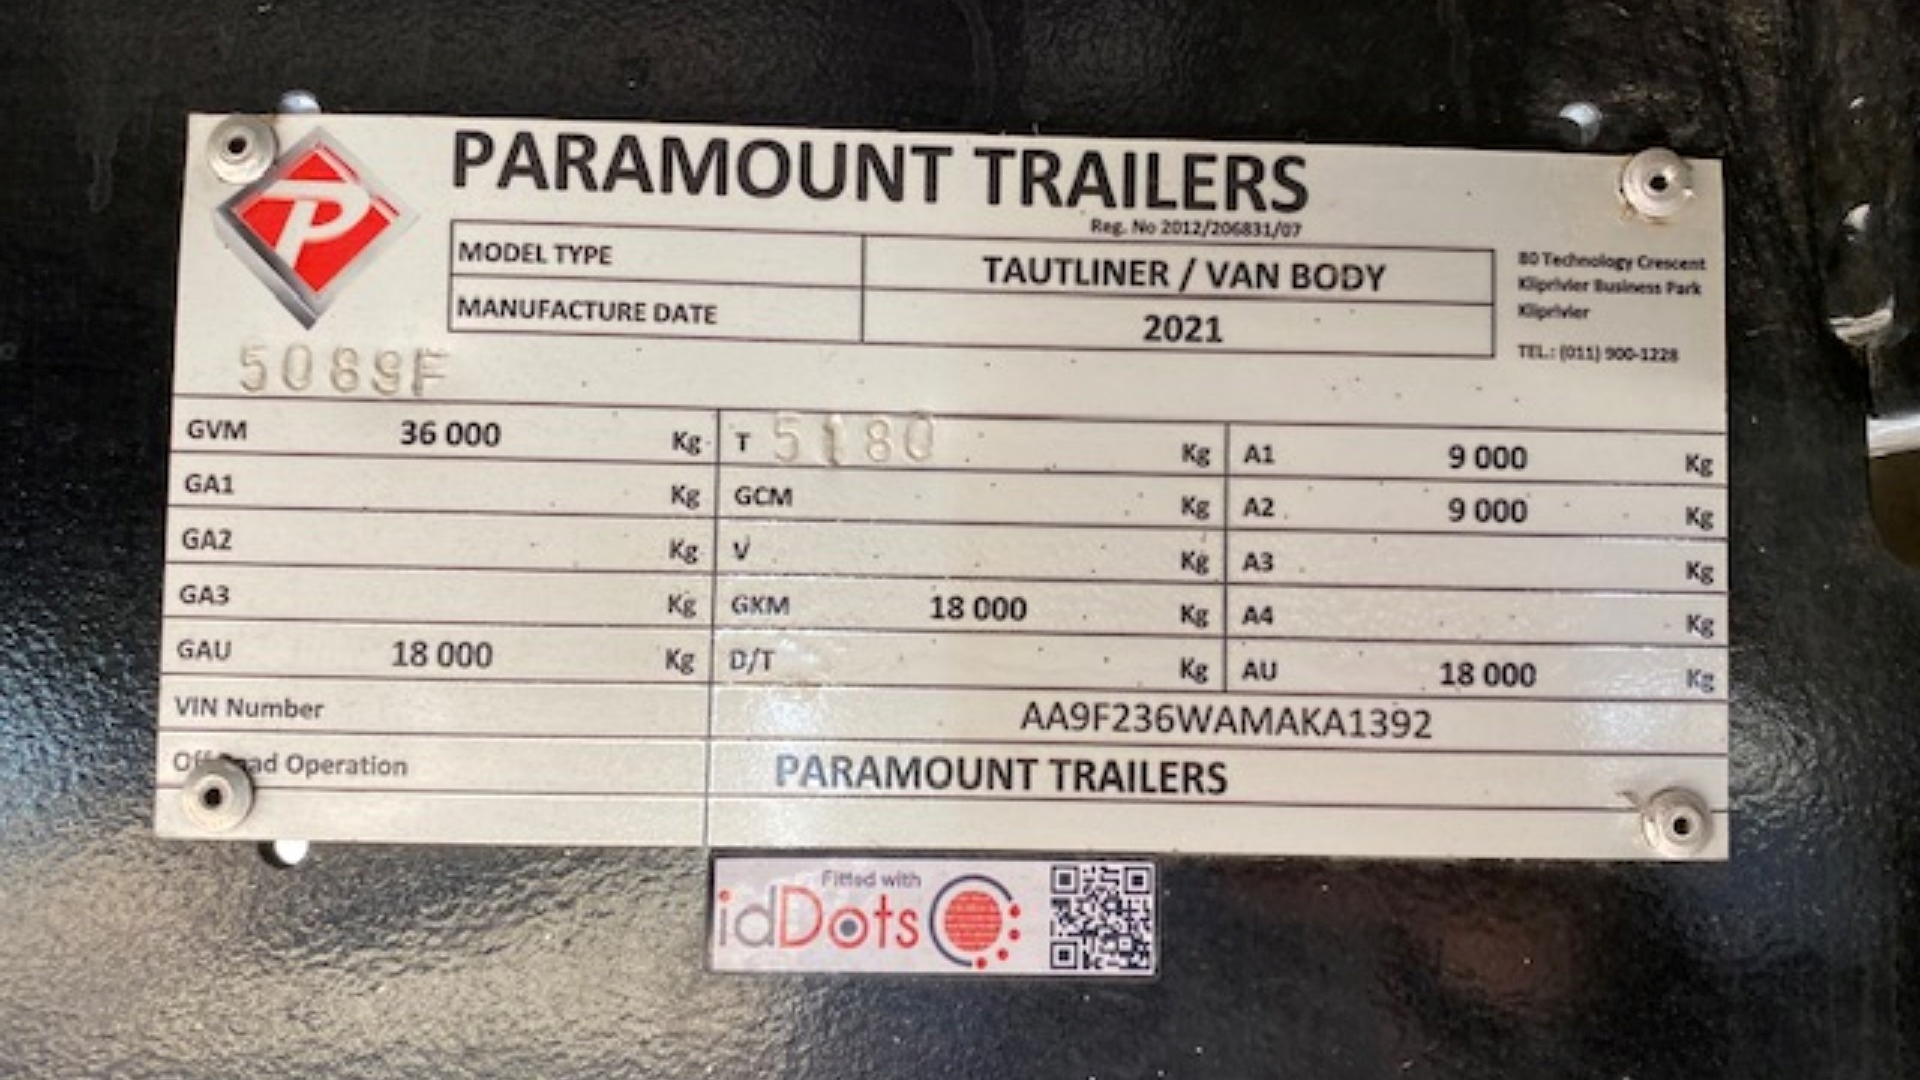 Paramount Trailers Tautliner 6/12 Superlink Tautliner Trailer 2022 for sale by Atlas Truck Centre Pty Ltd | Truck & Trailer Marketplaces